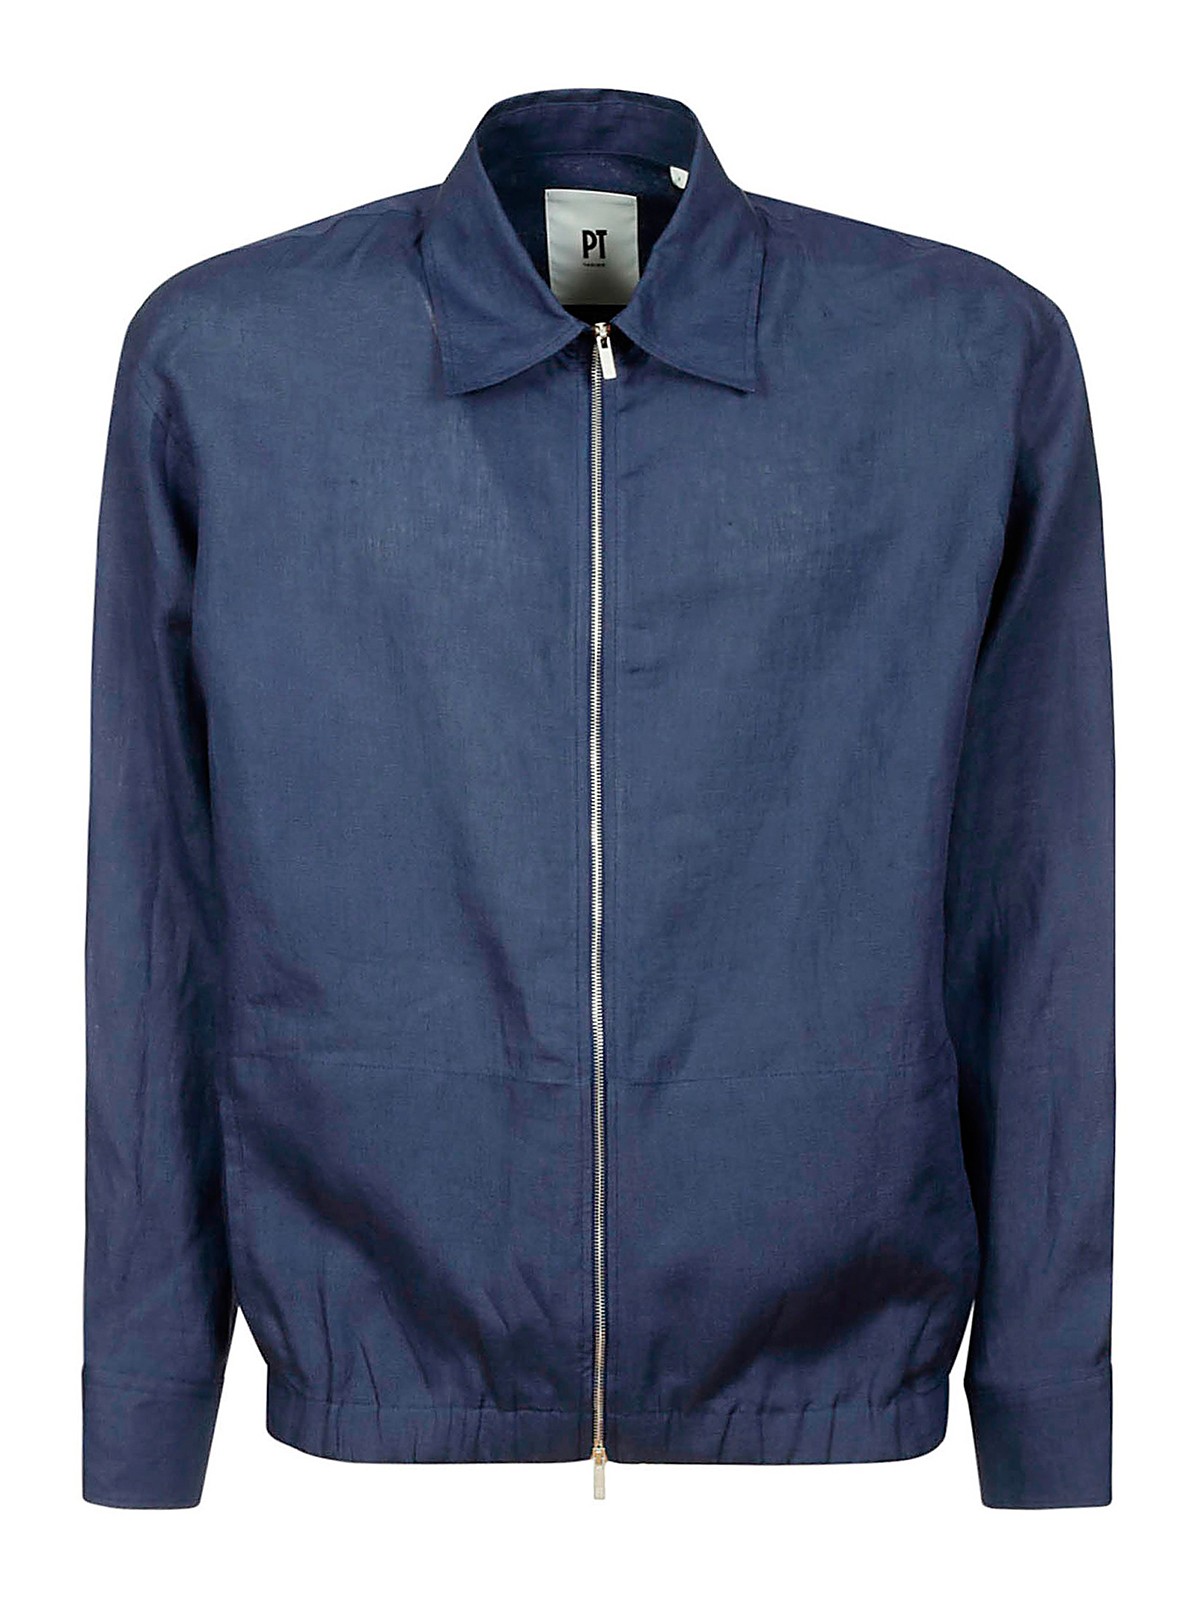 Casual jackets Pt Torino - Shirt style jacket - TL6SZP010CPT01CN0350